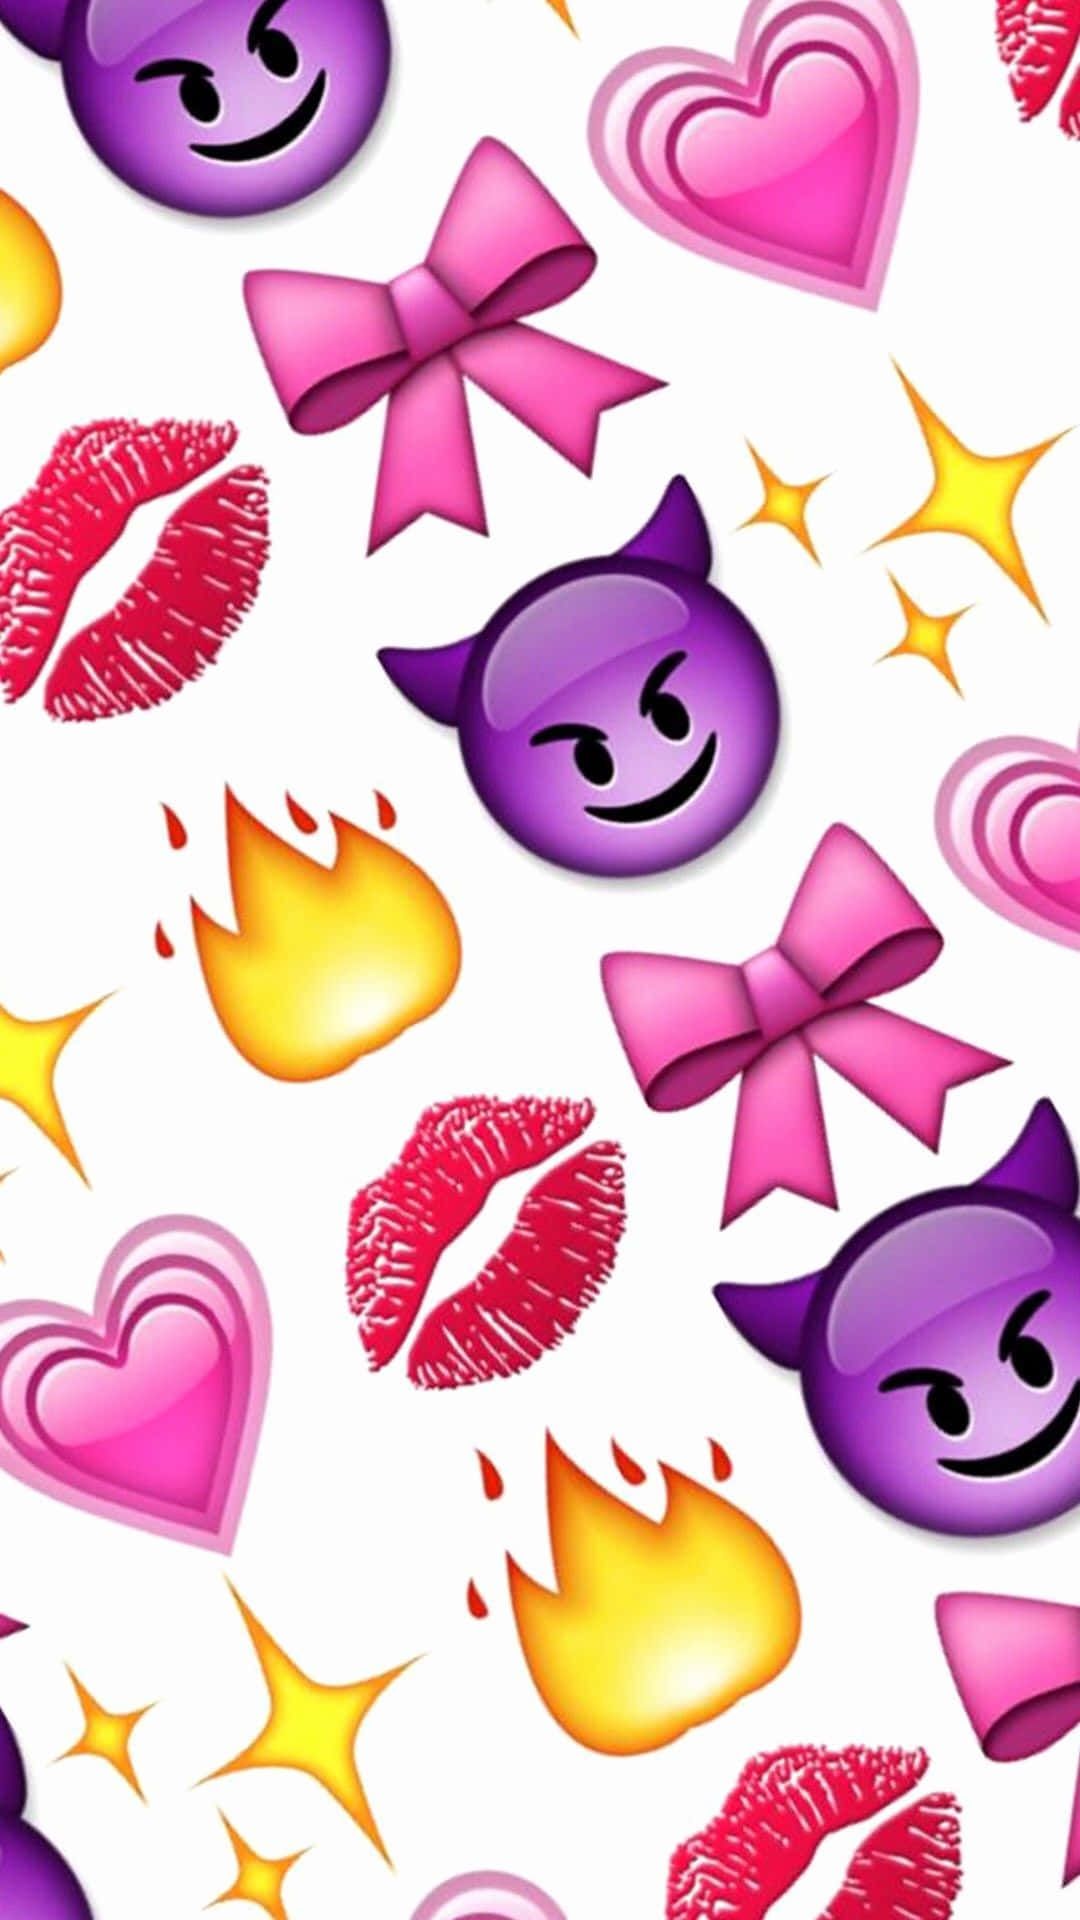 Iphone wallpaper emojis, Cute emoji wallpaper, Emoji wallpaper for girls - Emoji